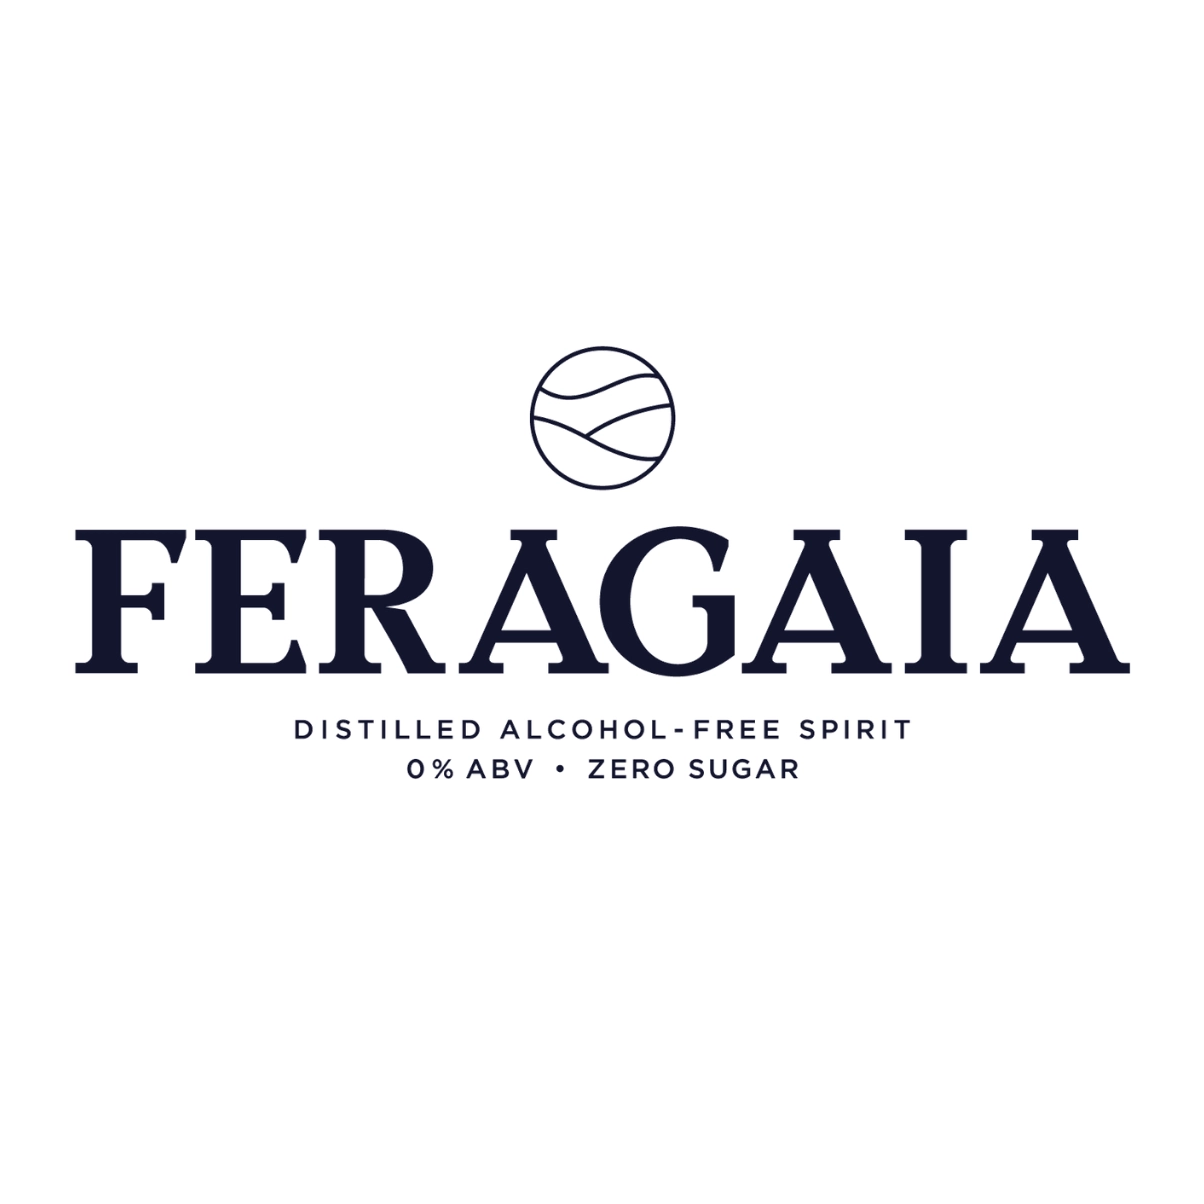 Feragaia brand logo